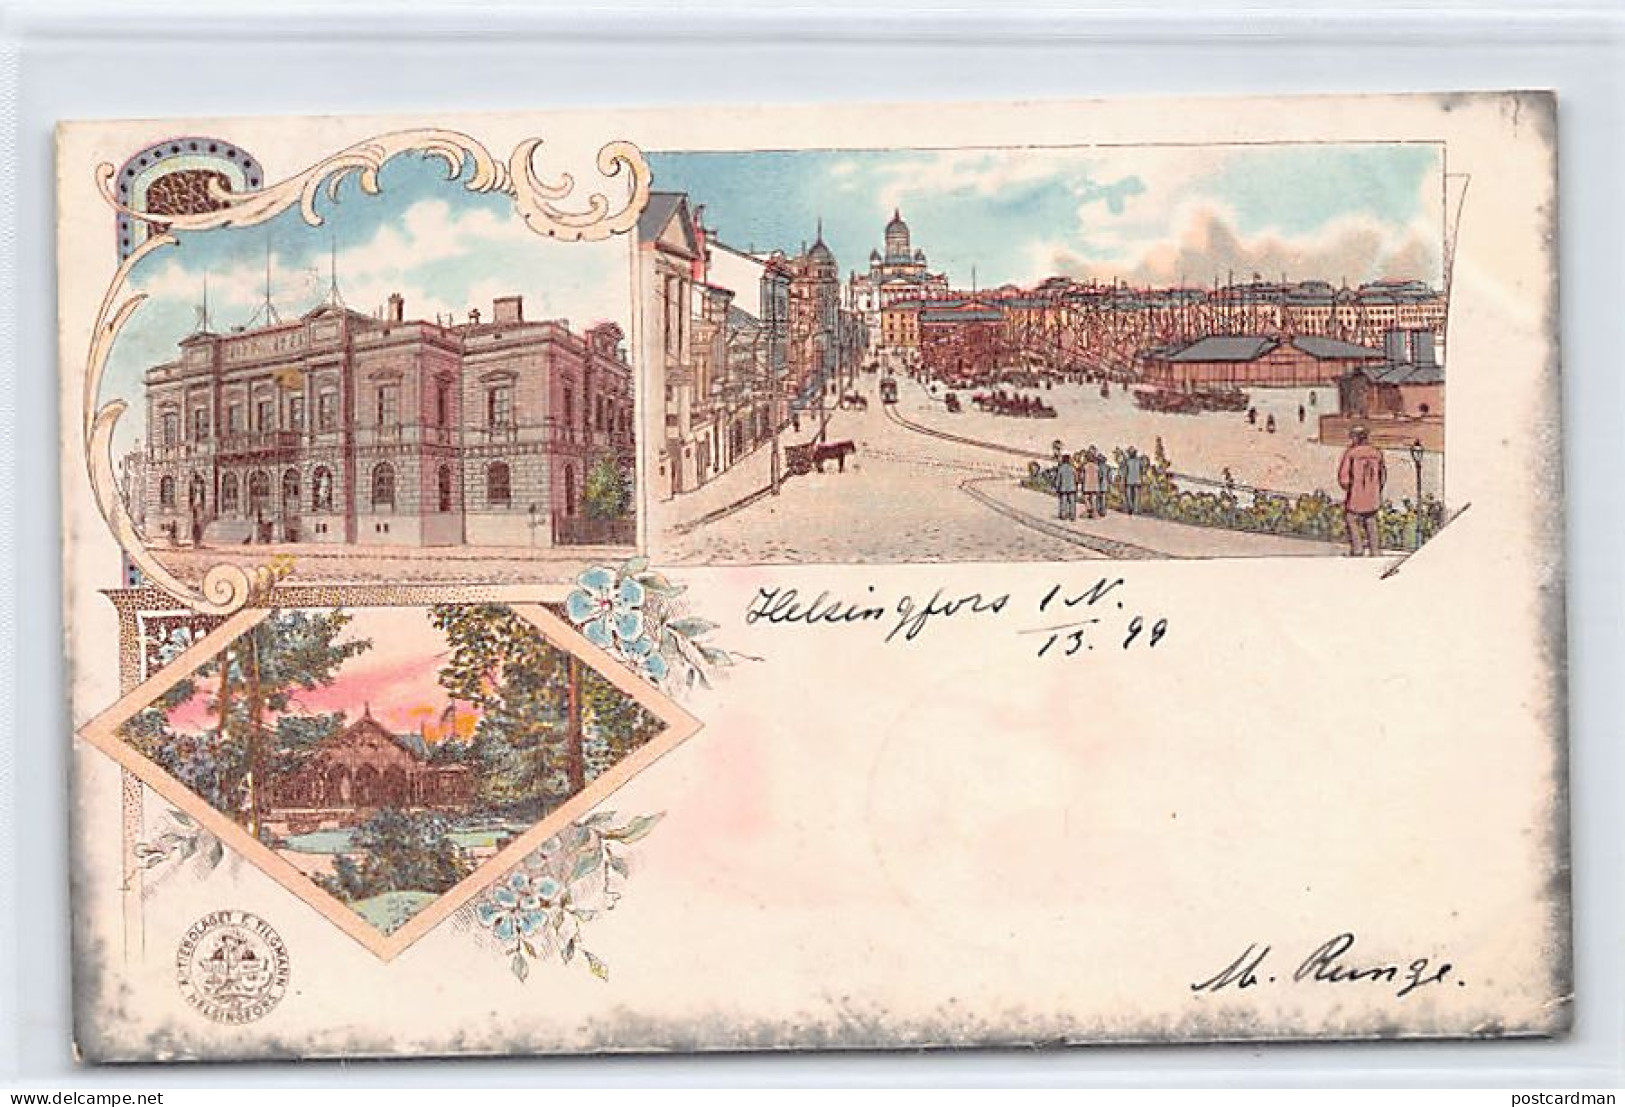 Finland - HELSINKI - Litho Postcard - Year 1899 - Publ. Unknown  - Finnland